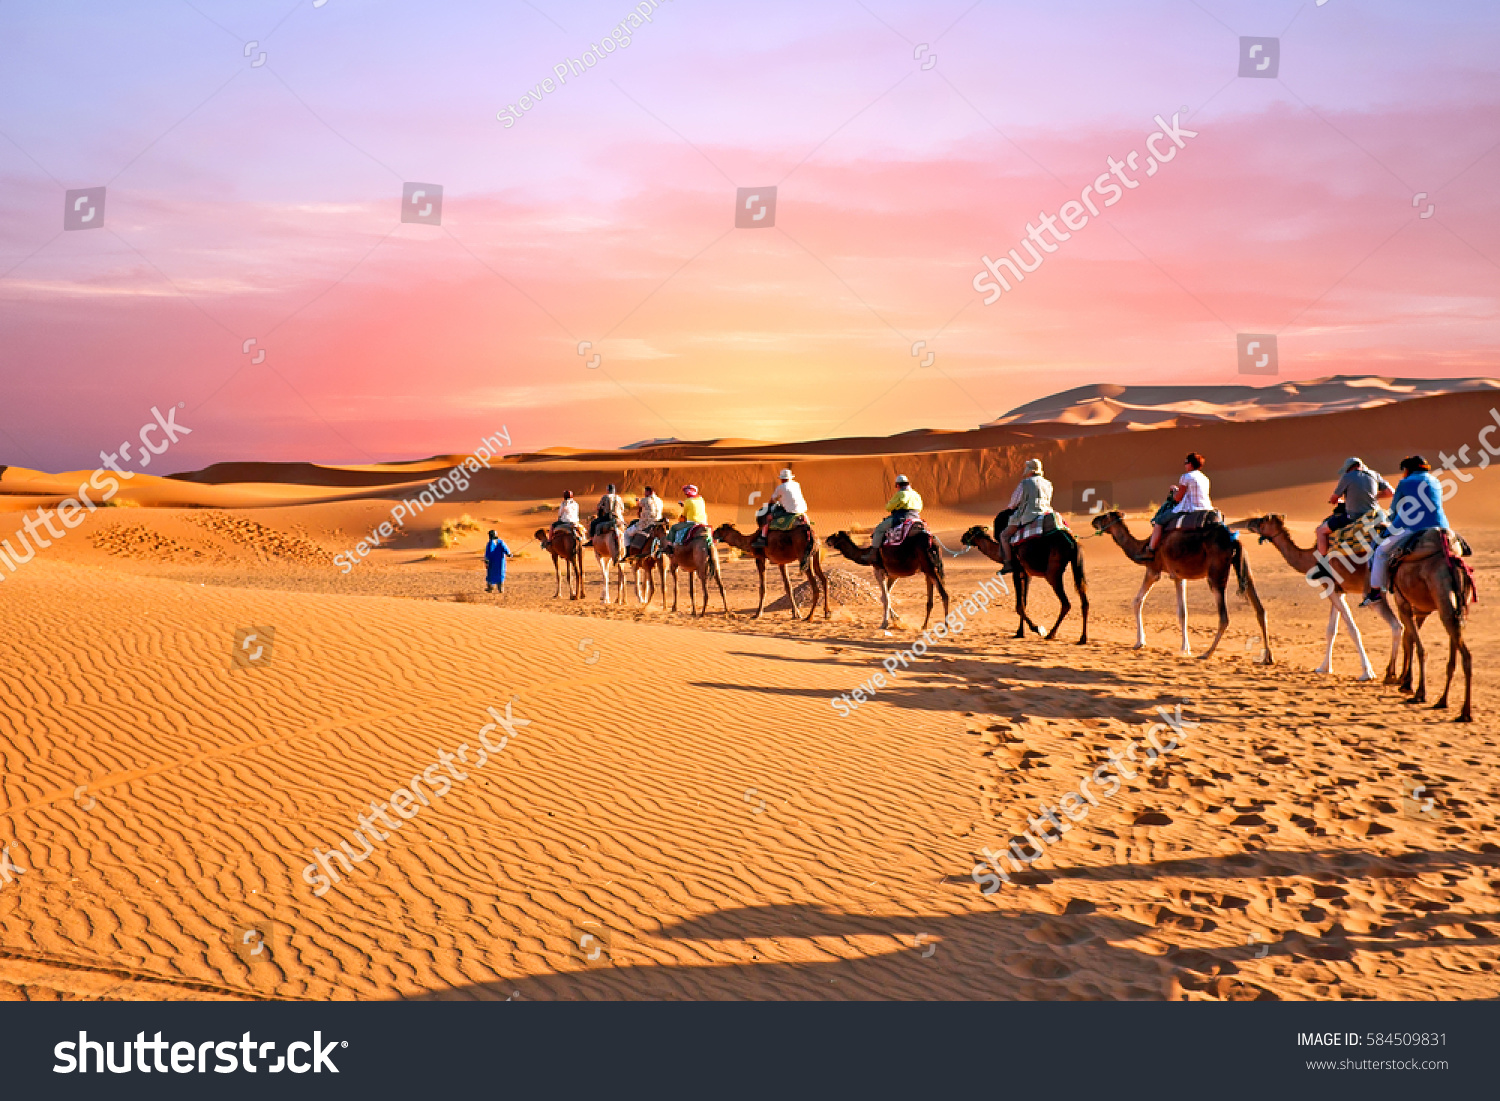 Camel caravan going through the sand dunes in the Sahara Desert, Morocco at sunset #584509831